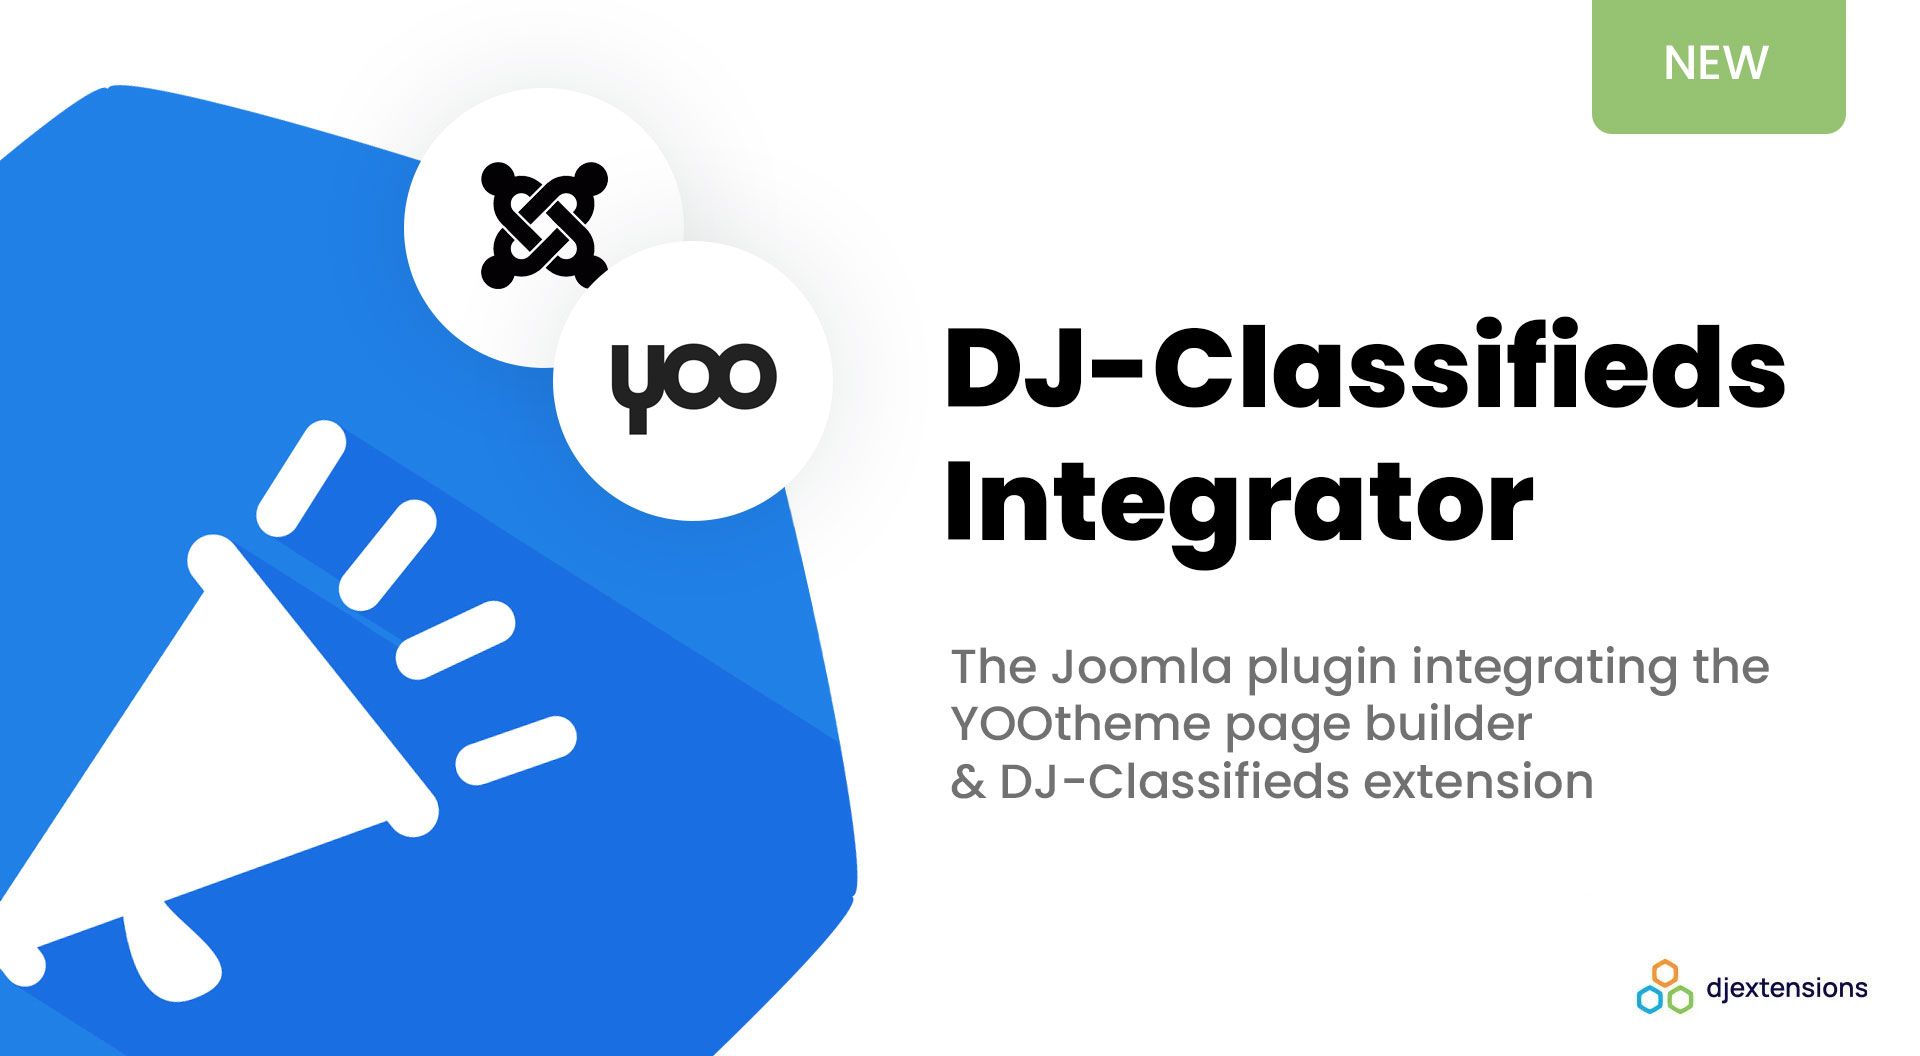 Meet DJ-Classifieds integrator - a new Joomla plugin integrating YOOtheme web builder with DJ-Classifieds!